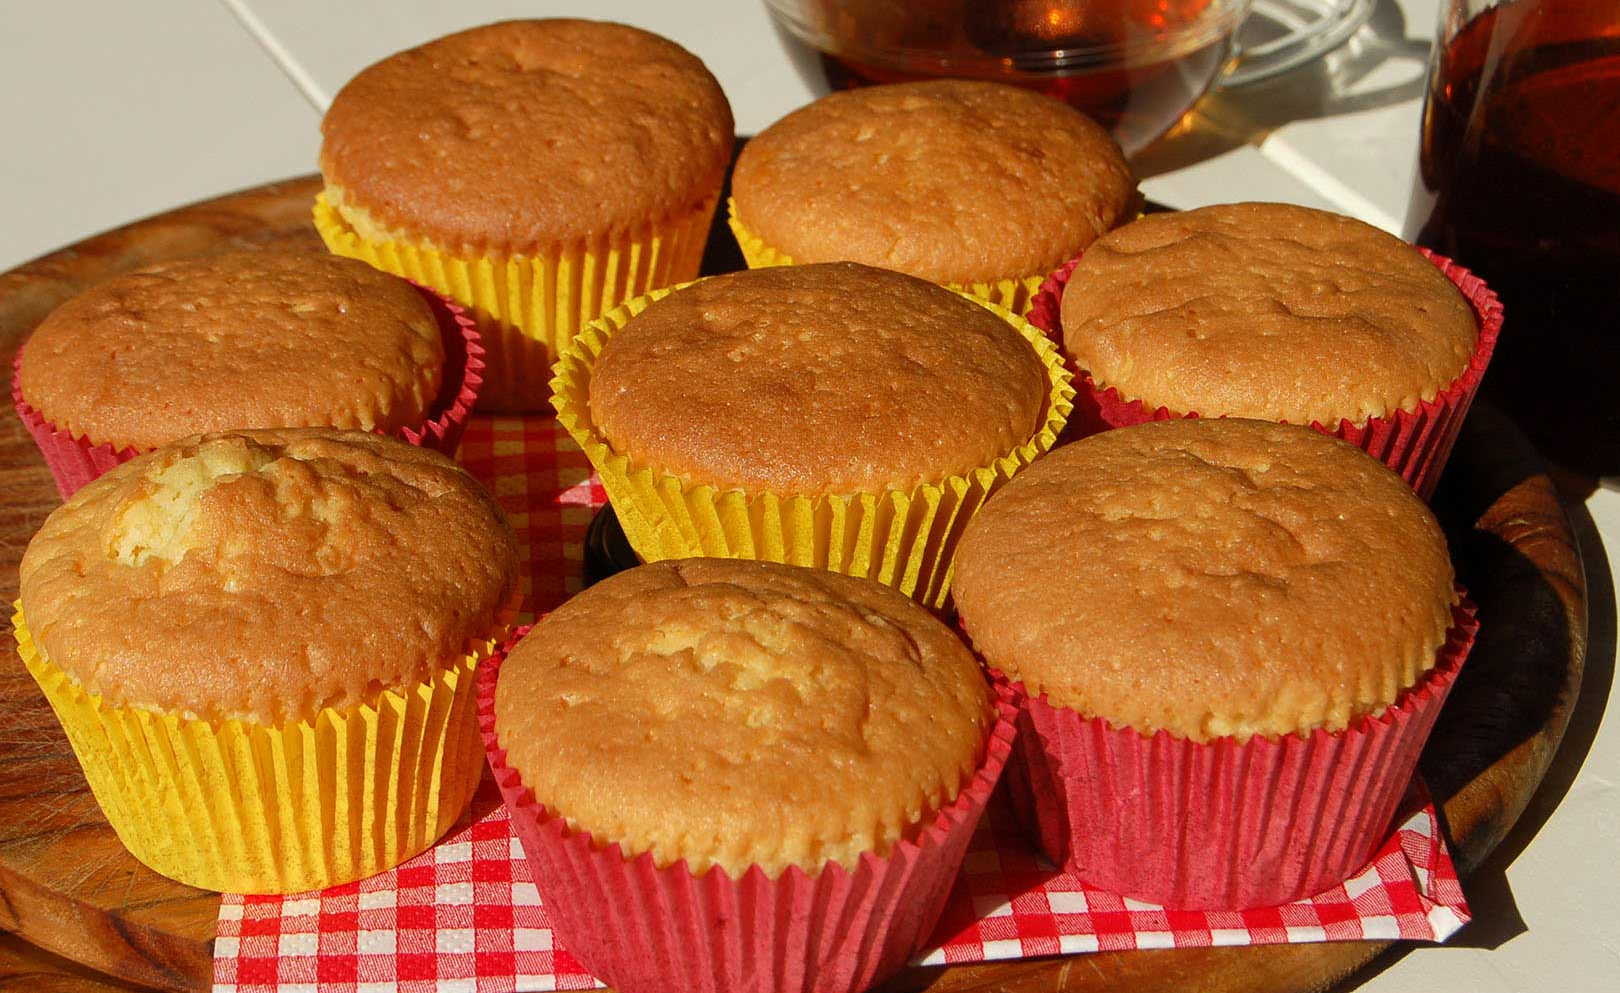 vandaag vergaan aantrekken Kleine cakejes van Koopmans Boerencake - Recept - Koopmans.com